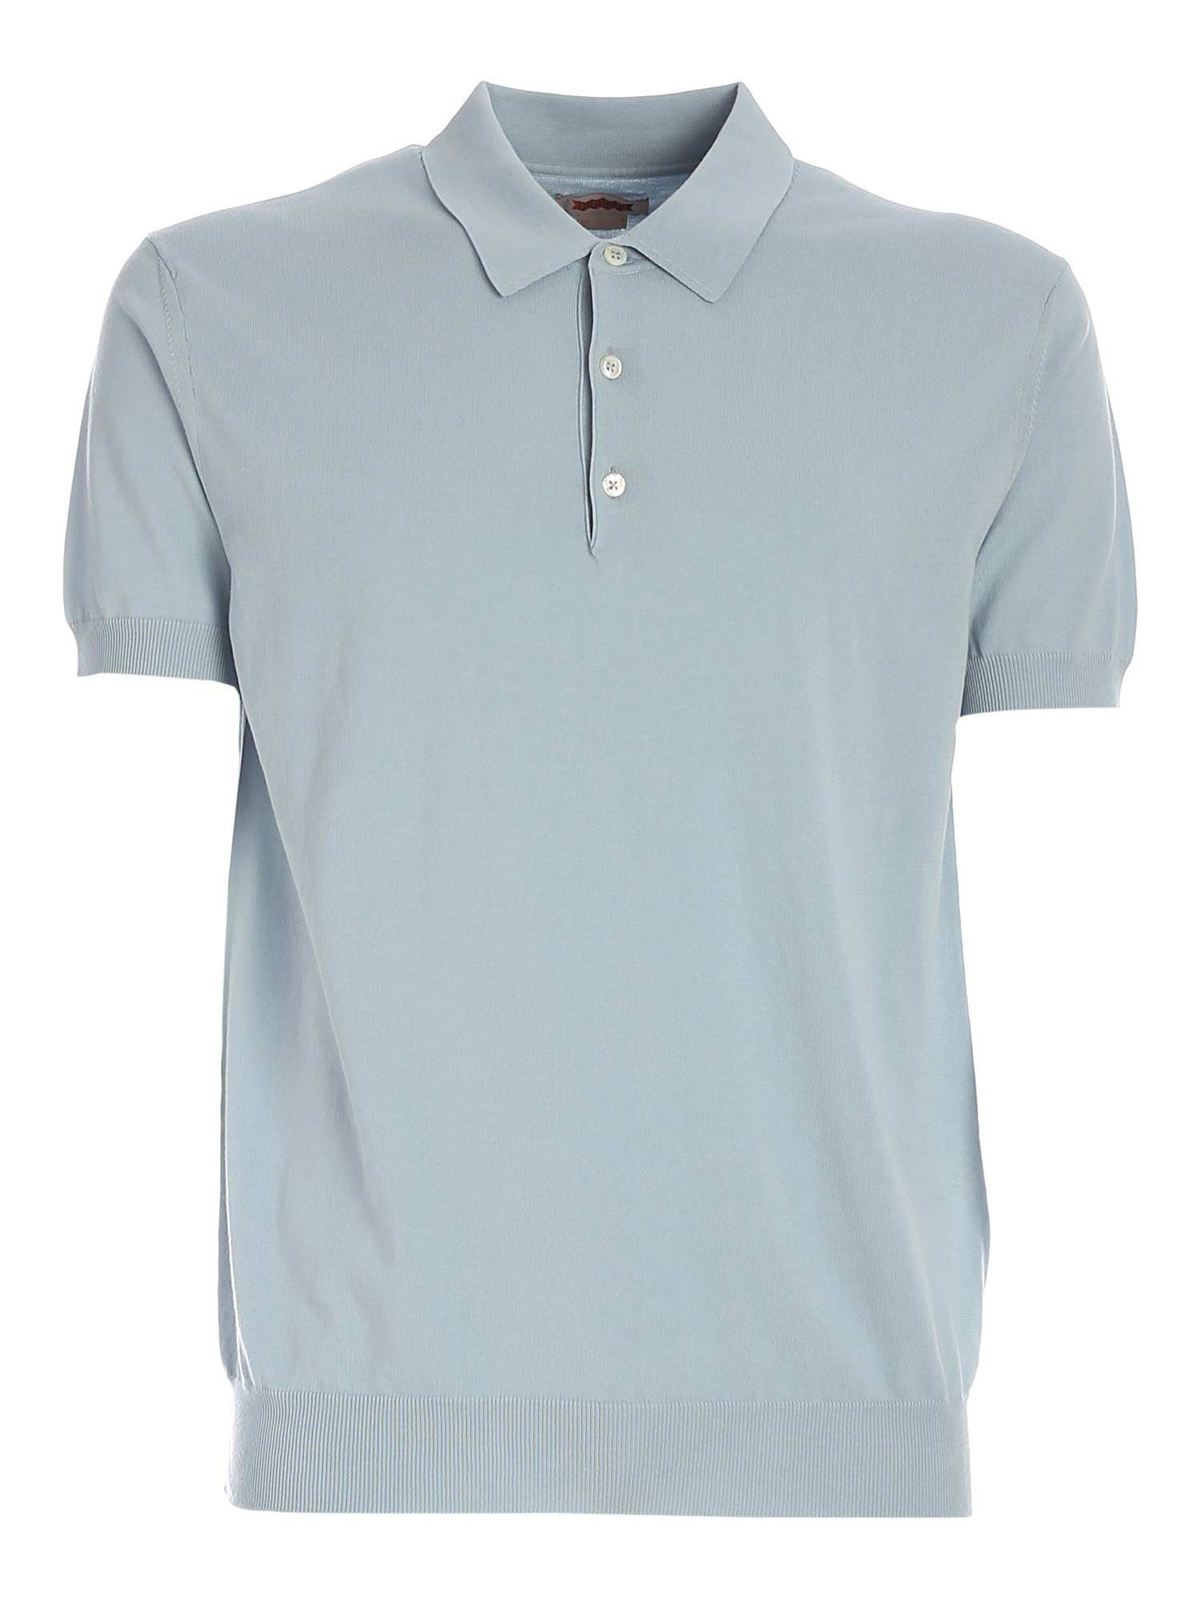 Baracuta - Cotton knit polo shirt in light blue - polo shirts ...